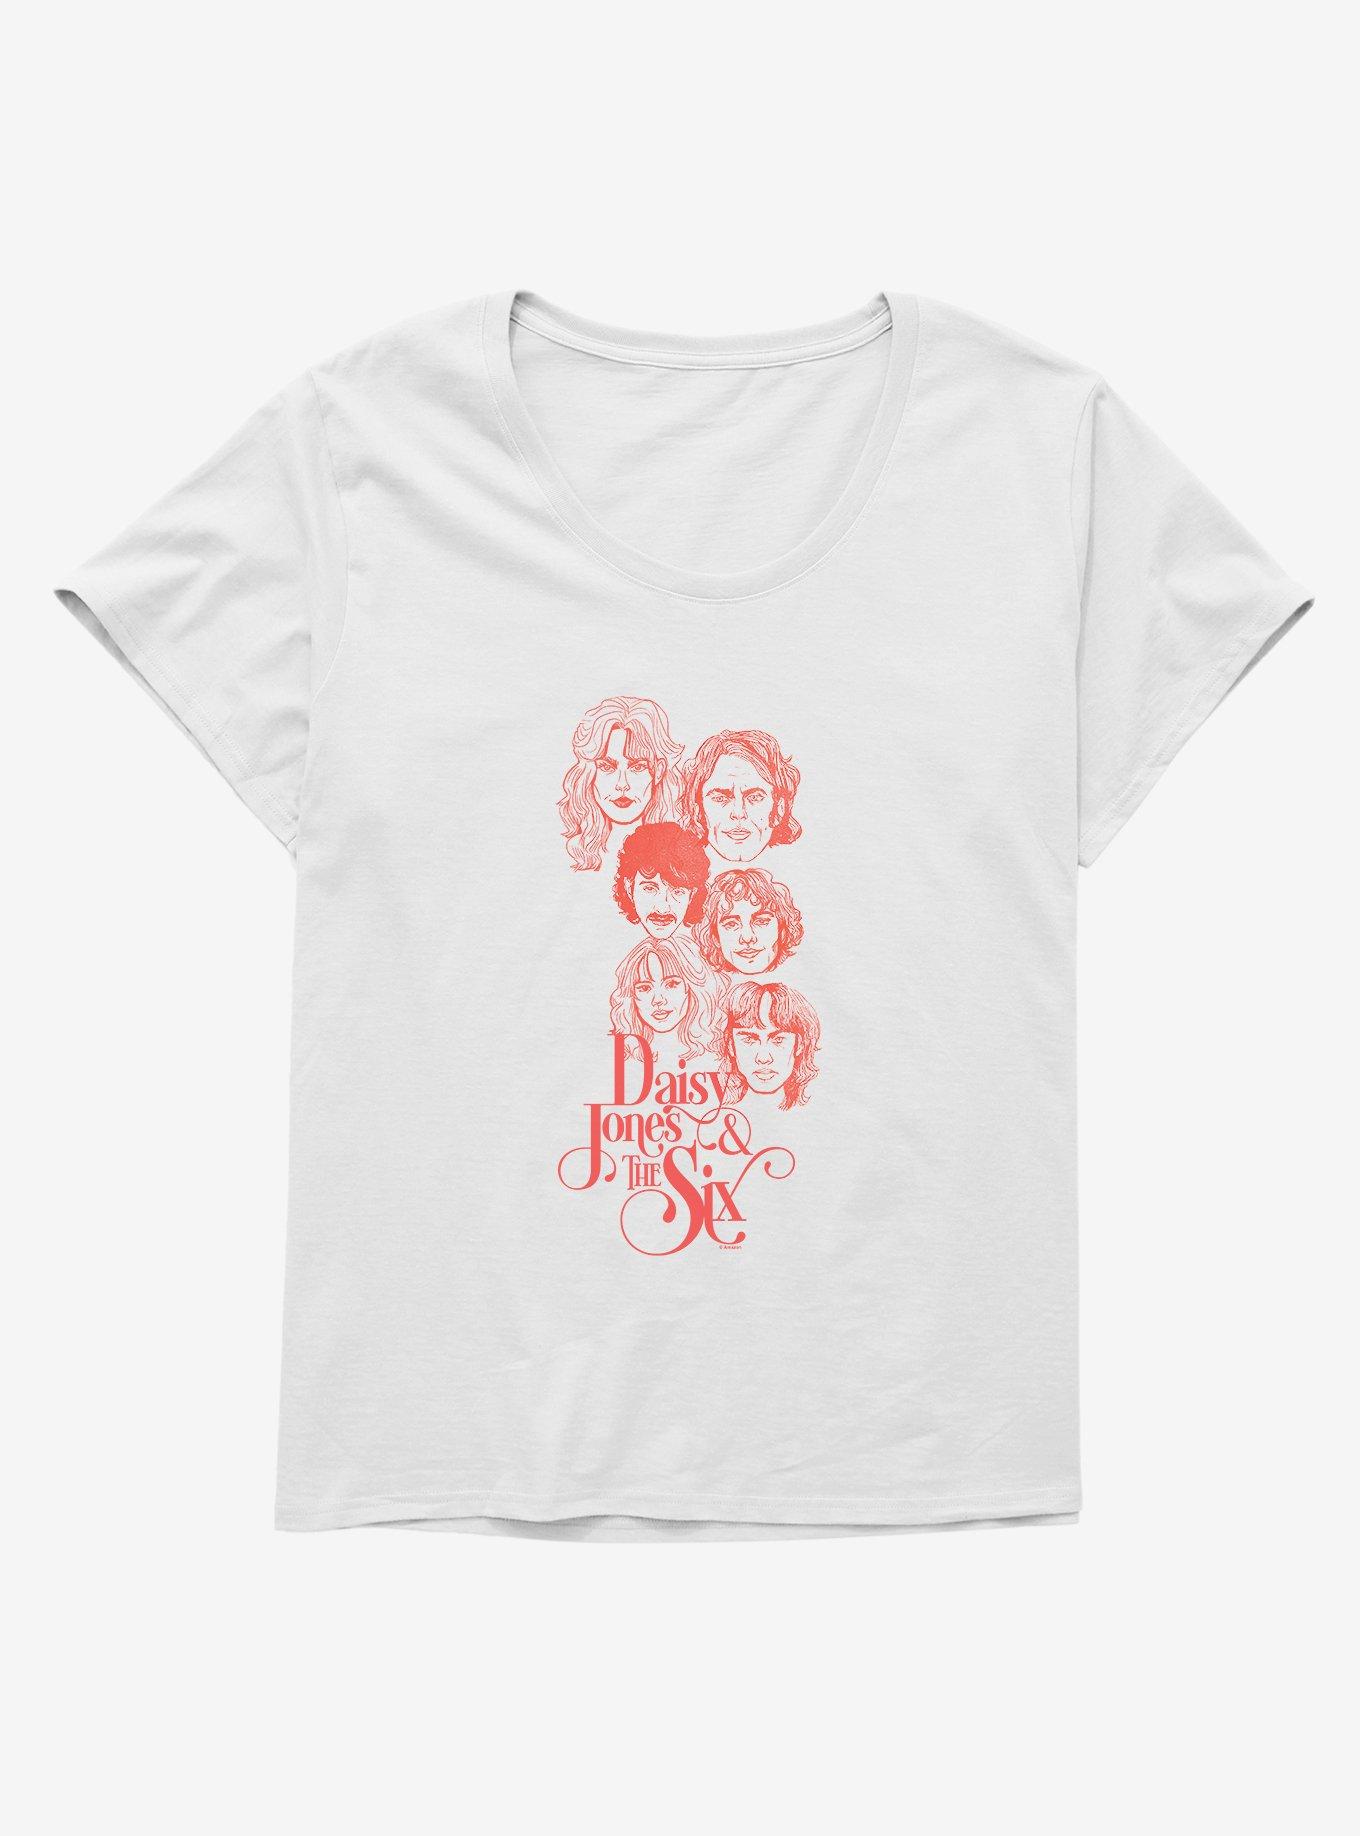 Daisy Jones & The Six Band Illustration Girls T-Shirt Plus